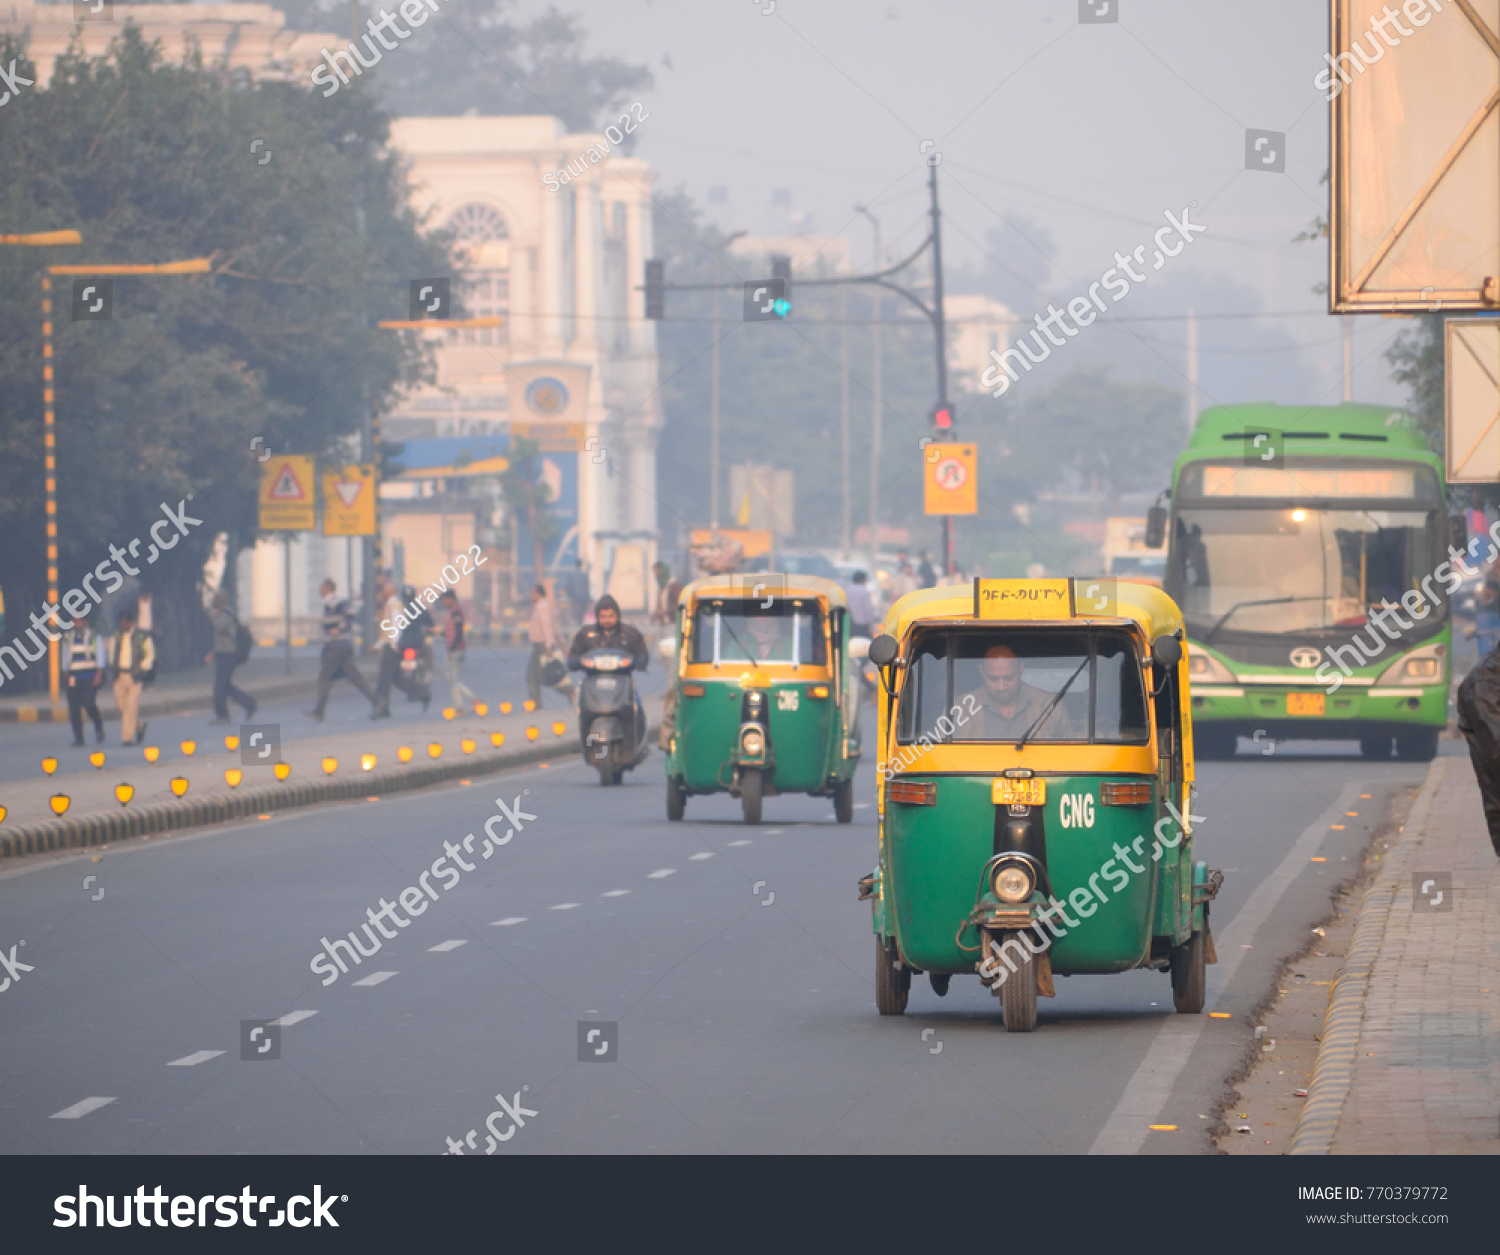 Delhi, India - November 21, 2017: Auto rickshaw traveling on the road. #770379772